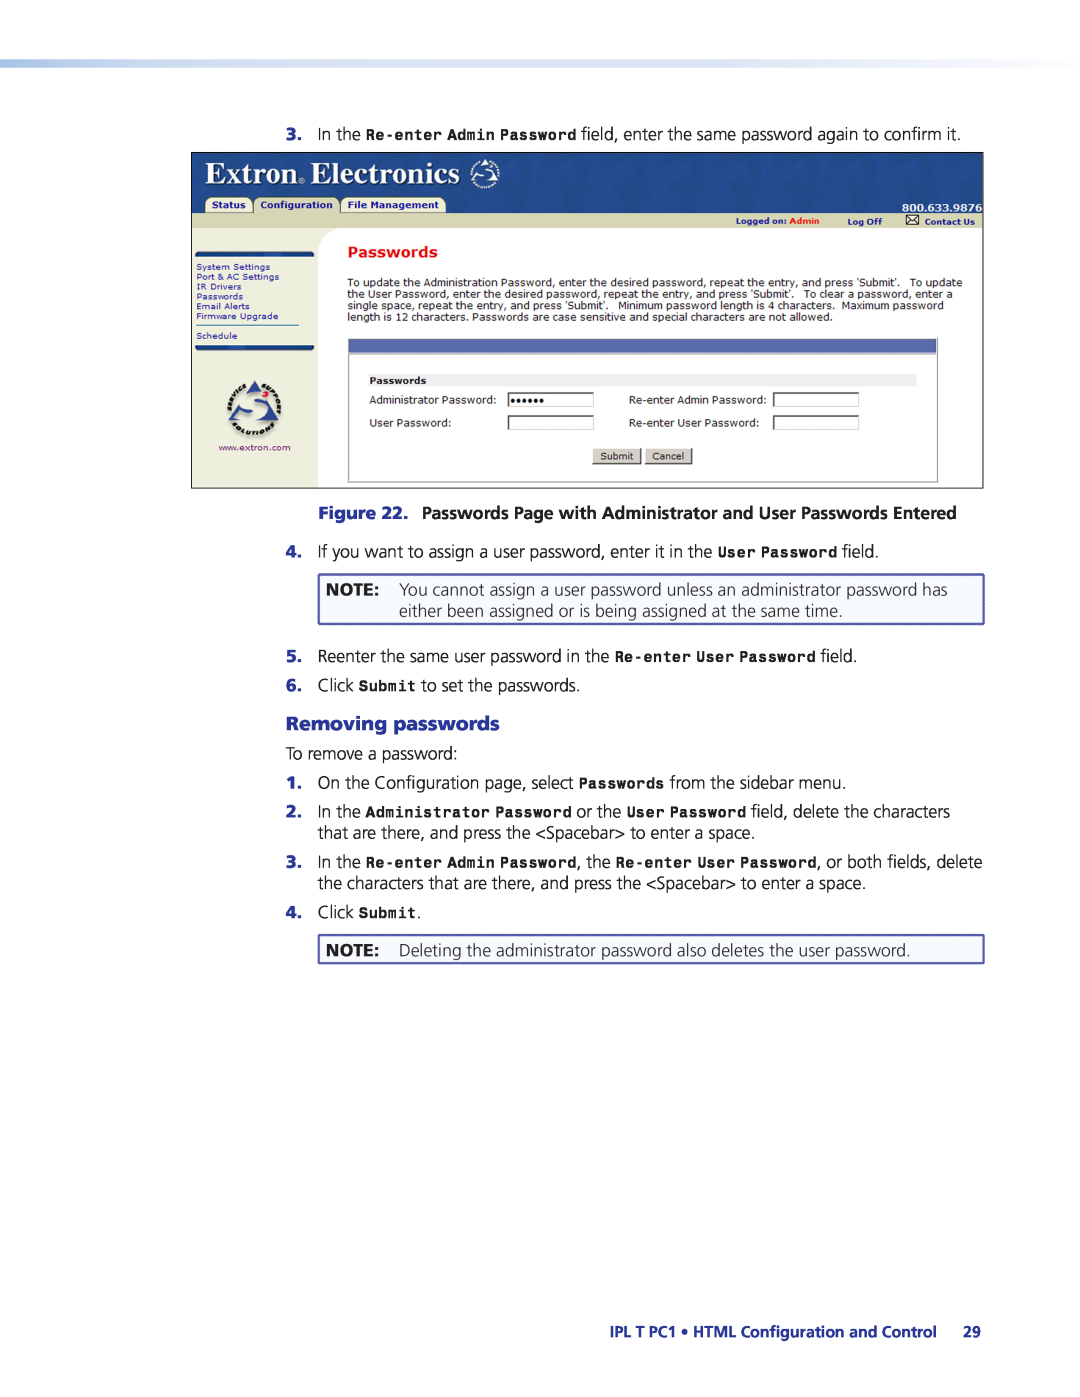 Extron electronic IPL T PC1i manual Removing passwords 